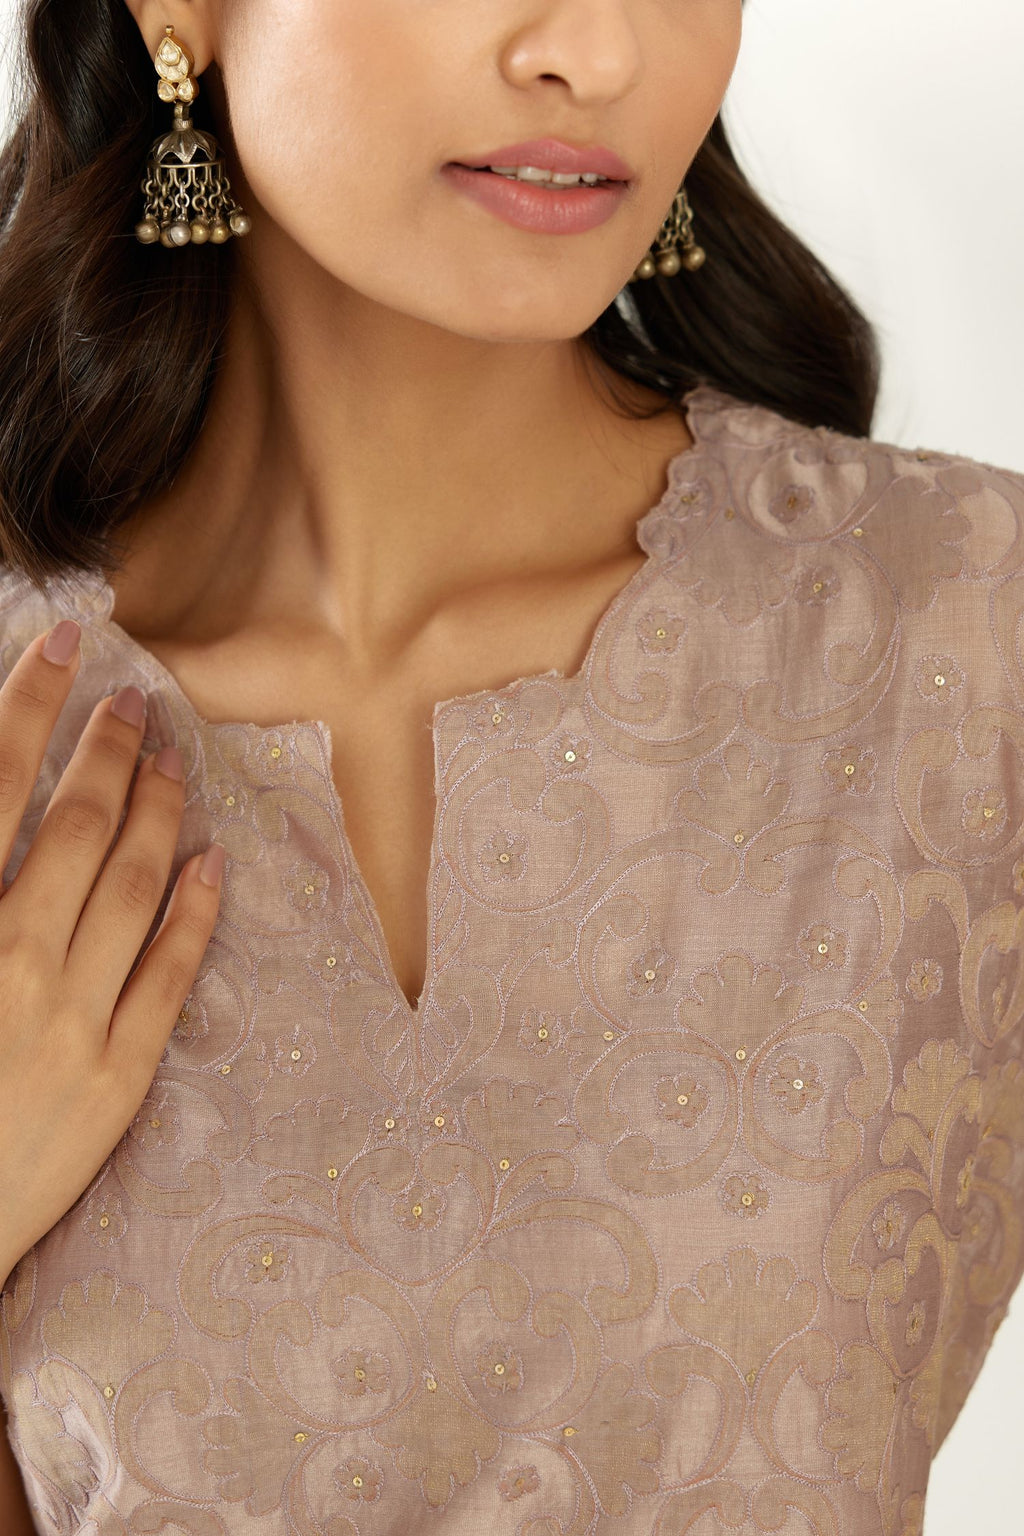 Silk chanderi straight kurta set with all-over tissue chanderi appliqué trellis jaal, highlighted with sequins.